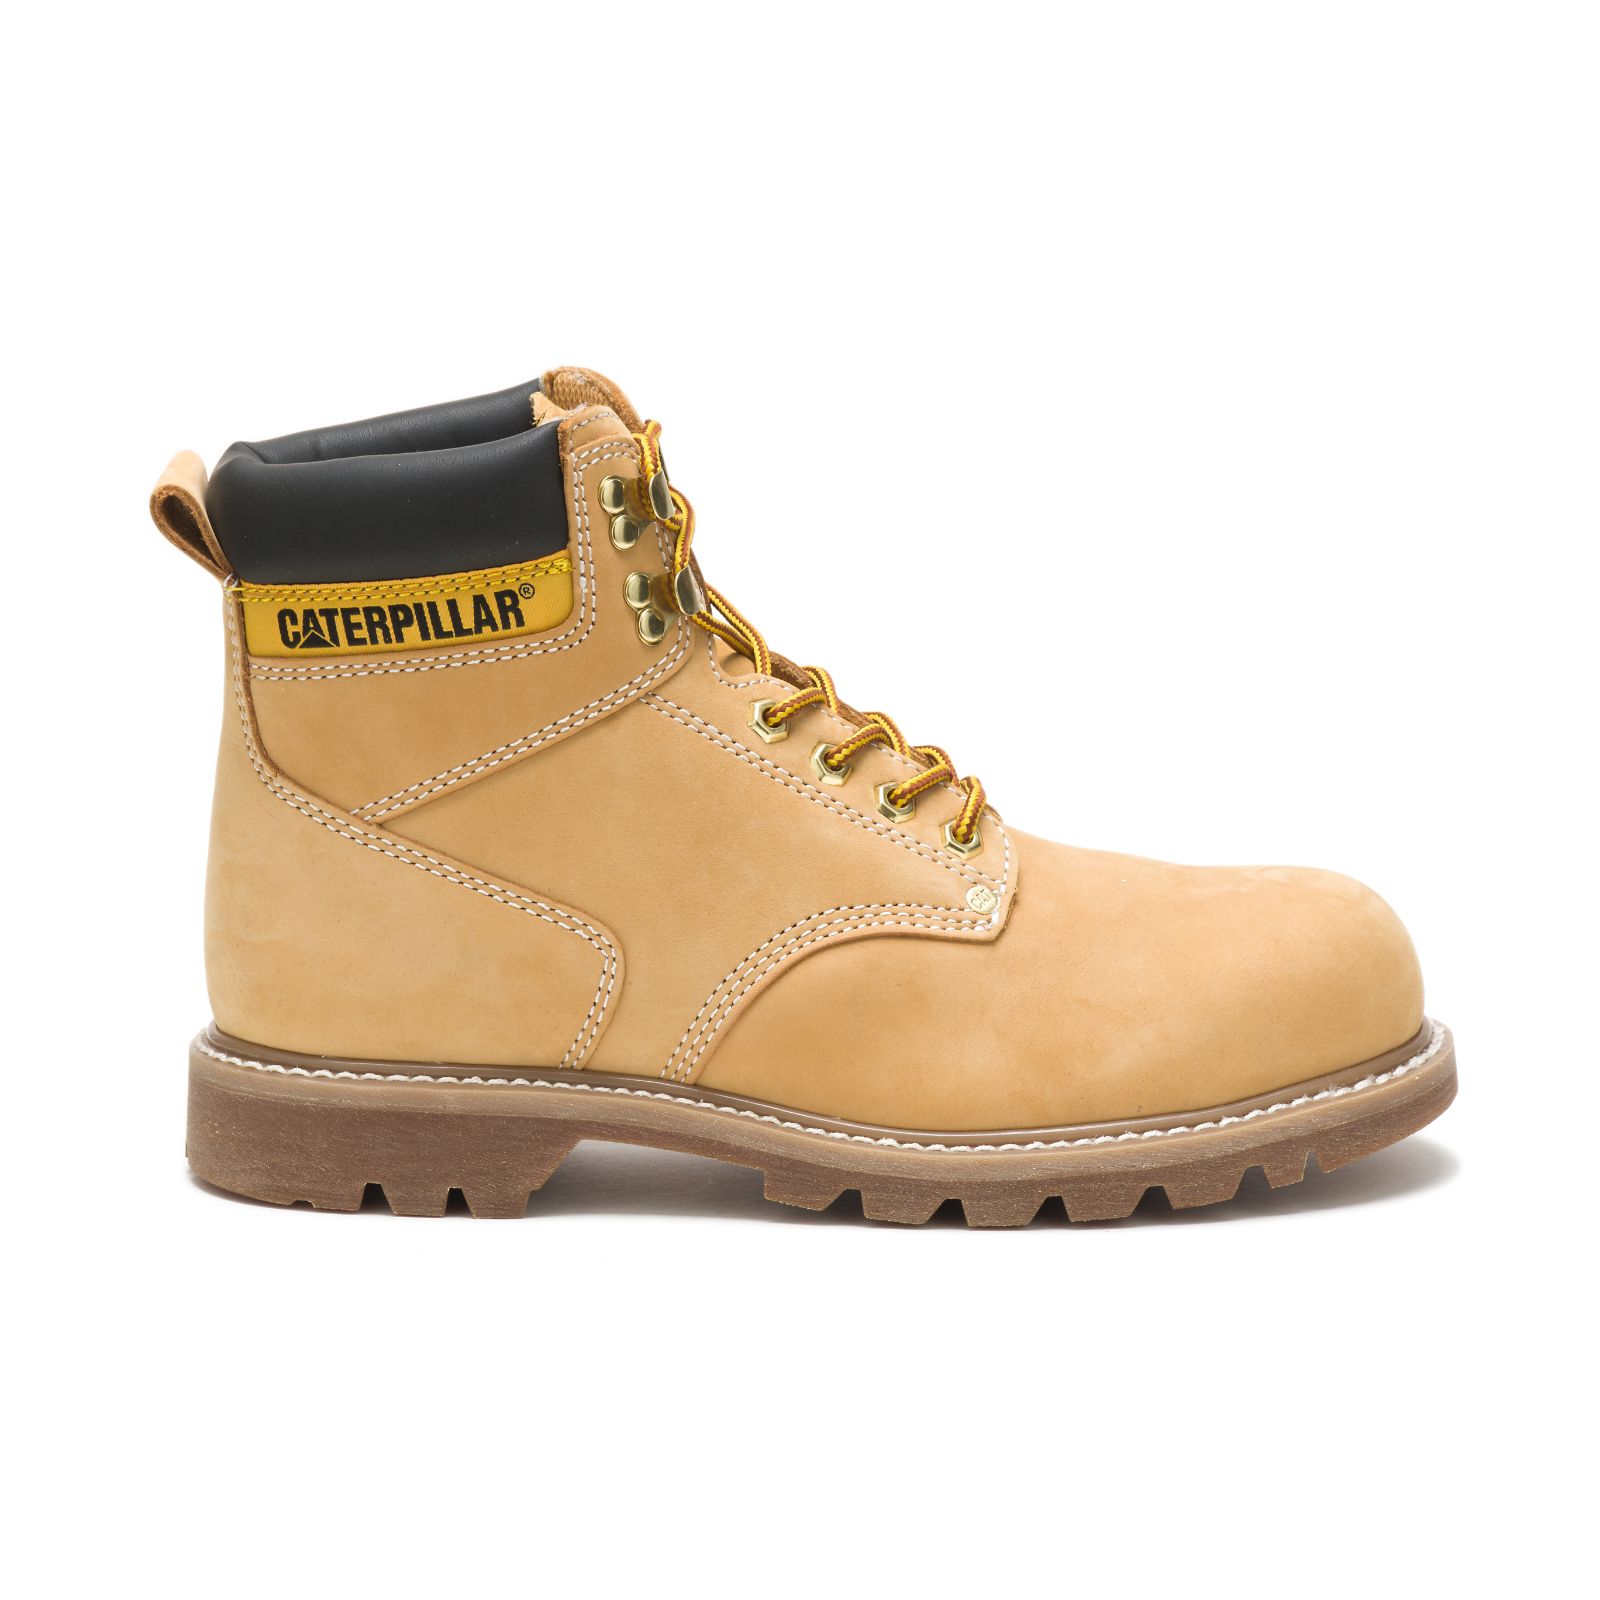 Men's Caterpillar Second Shift Steel Toe Steel Toe Boots Orange | Cat-694580